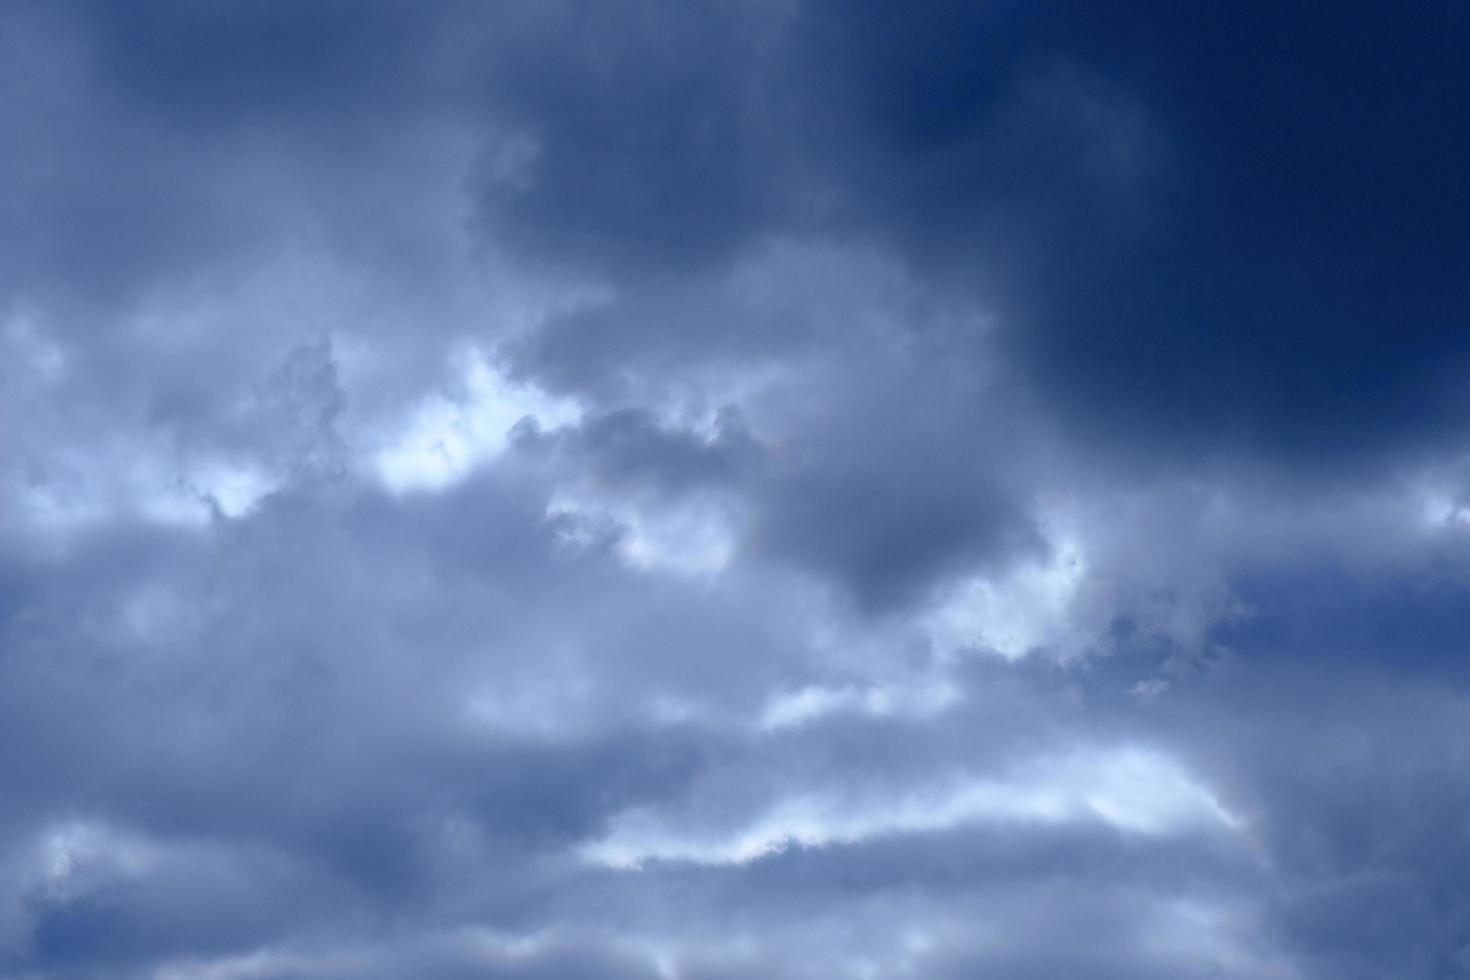 dramatische hoge diepblauwe lucht met pluizige wolken foto